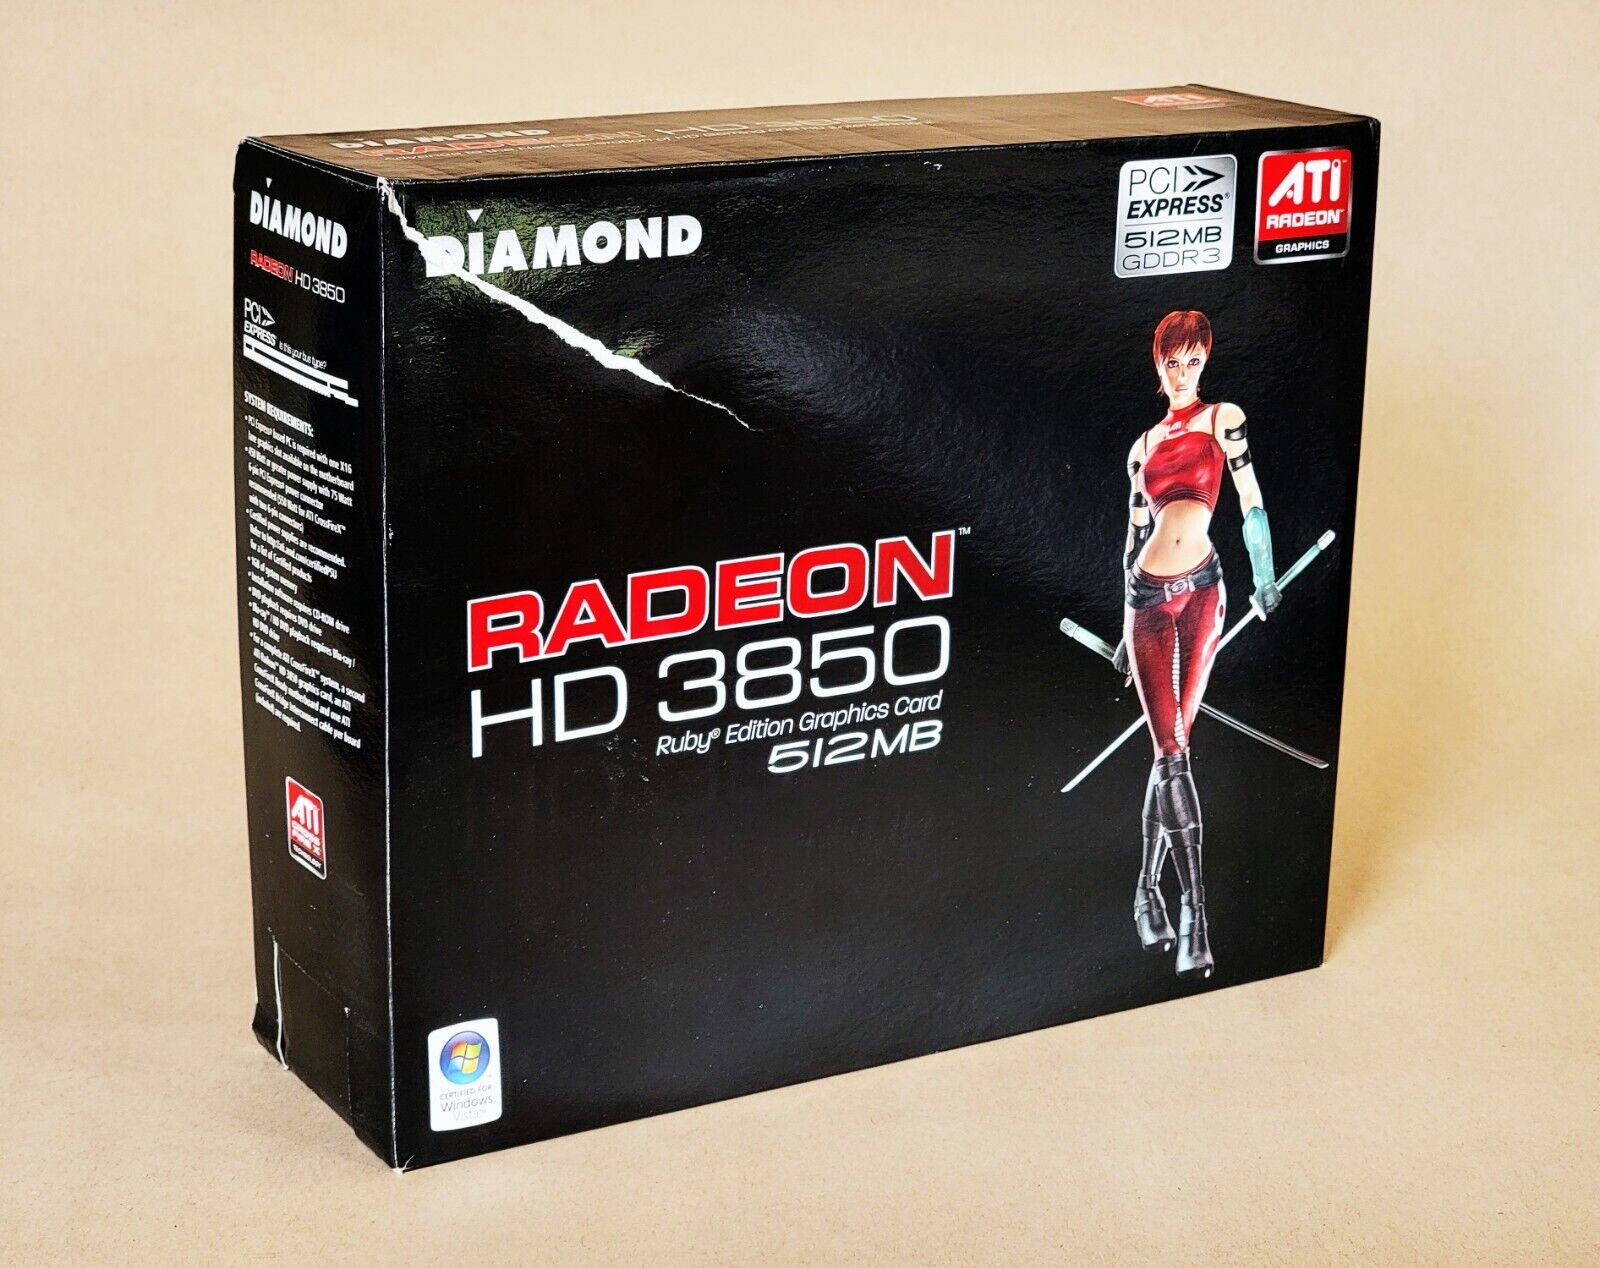 Diamond ATI Radeon HD 3850 512MB GDDR3 Graphics Card - NEW IN BOX